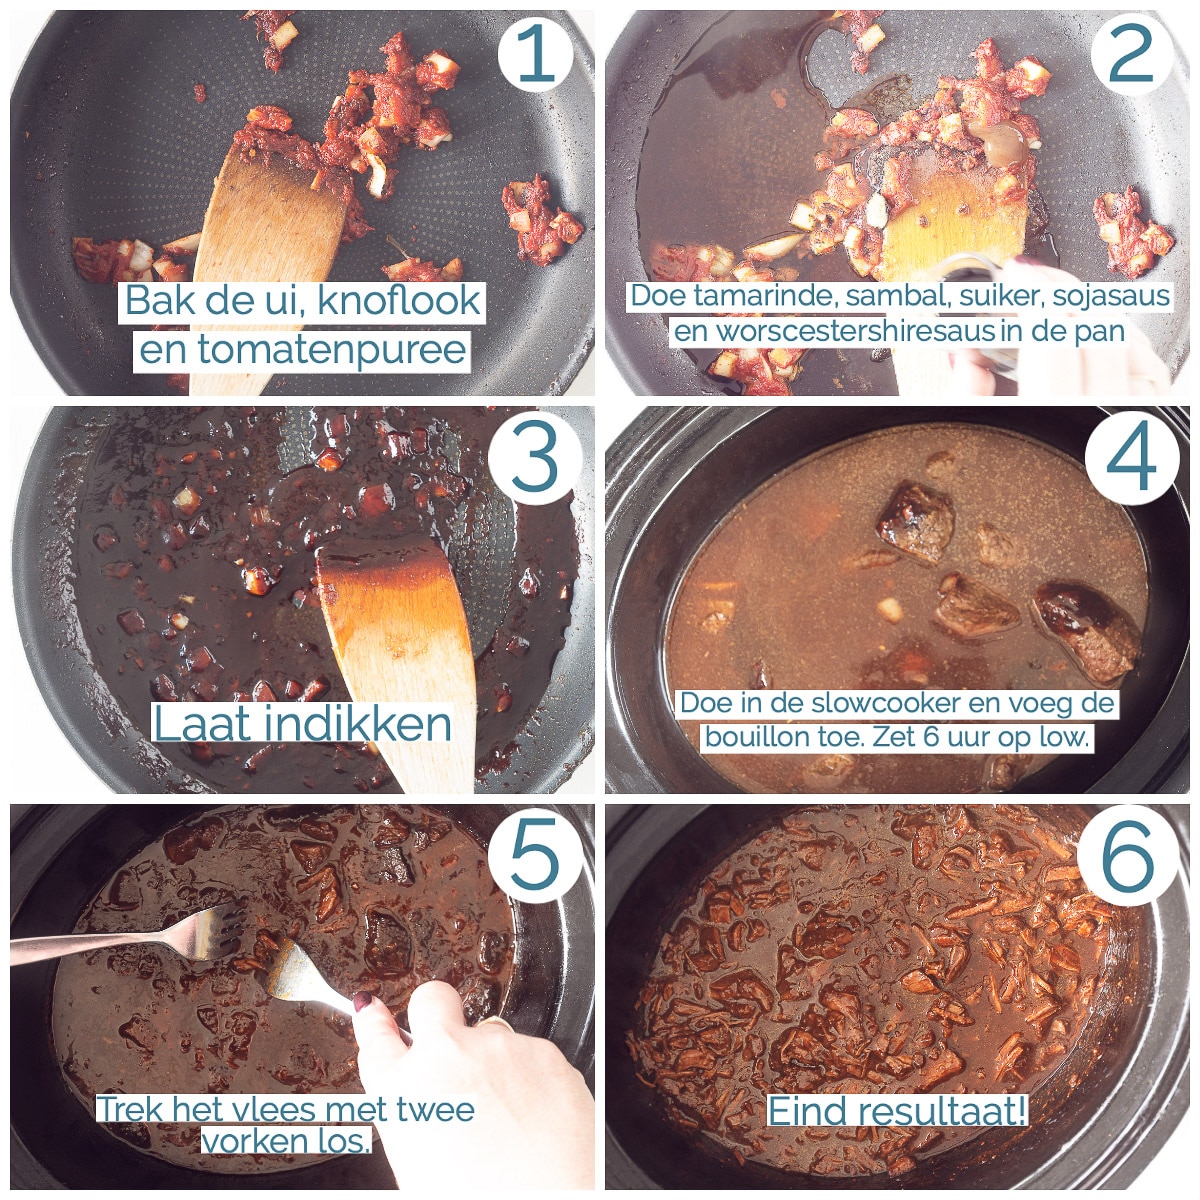 In 6 foto's de stappen om slowcooker pulled beef te maken